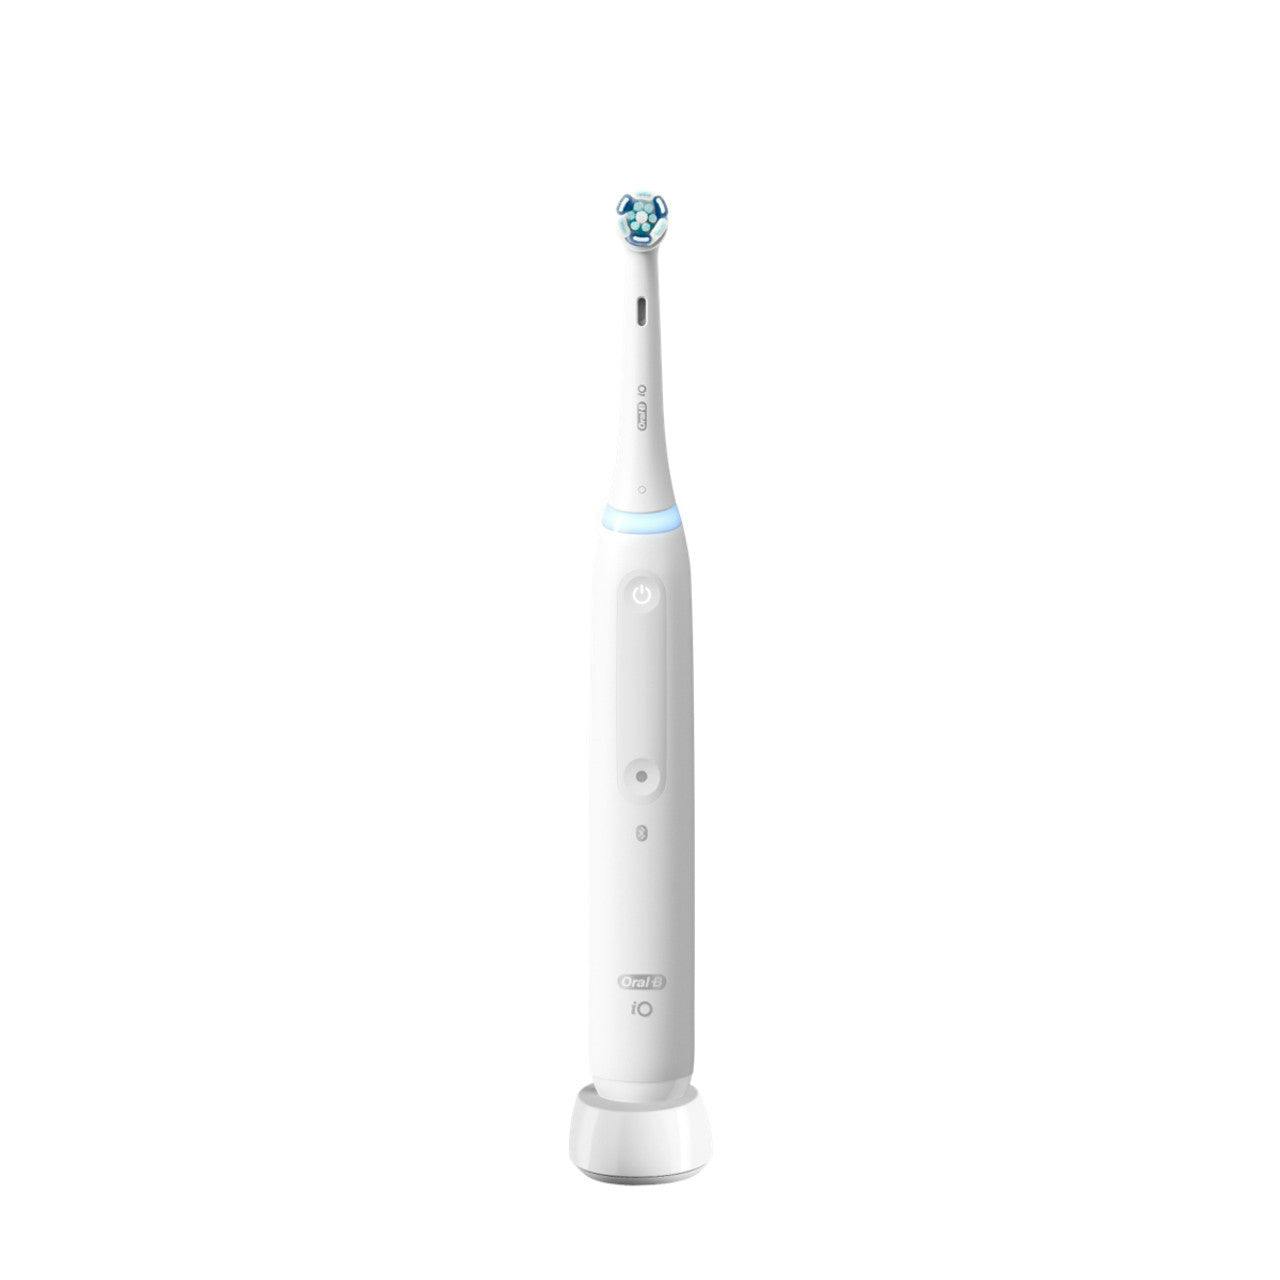 Oral-B iO Series 4 Electric Toothbrush WHITE